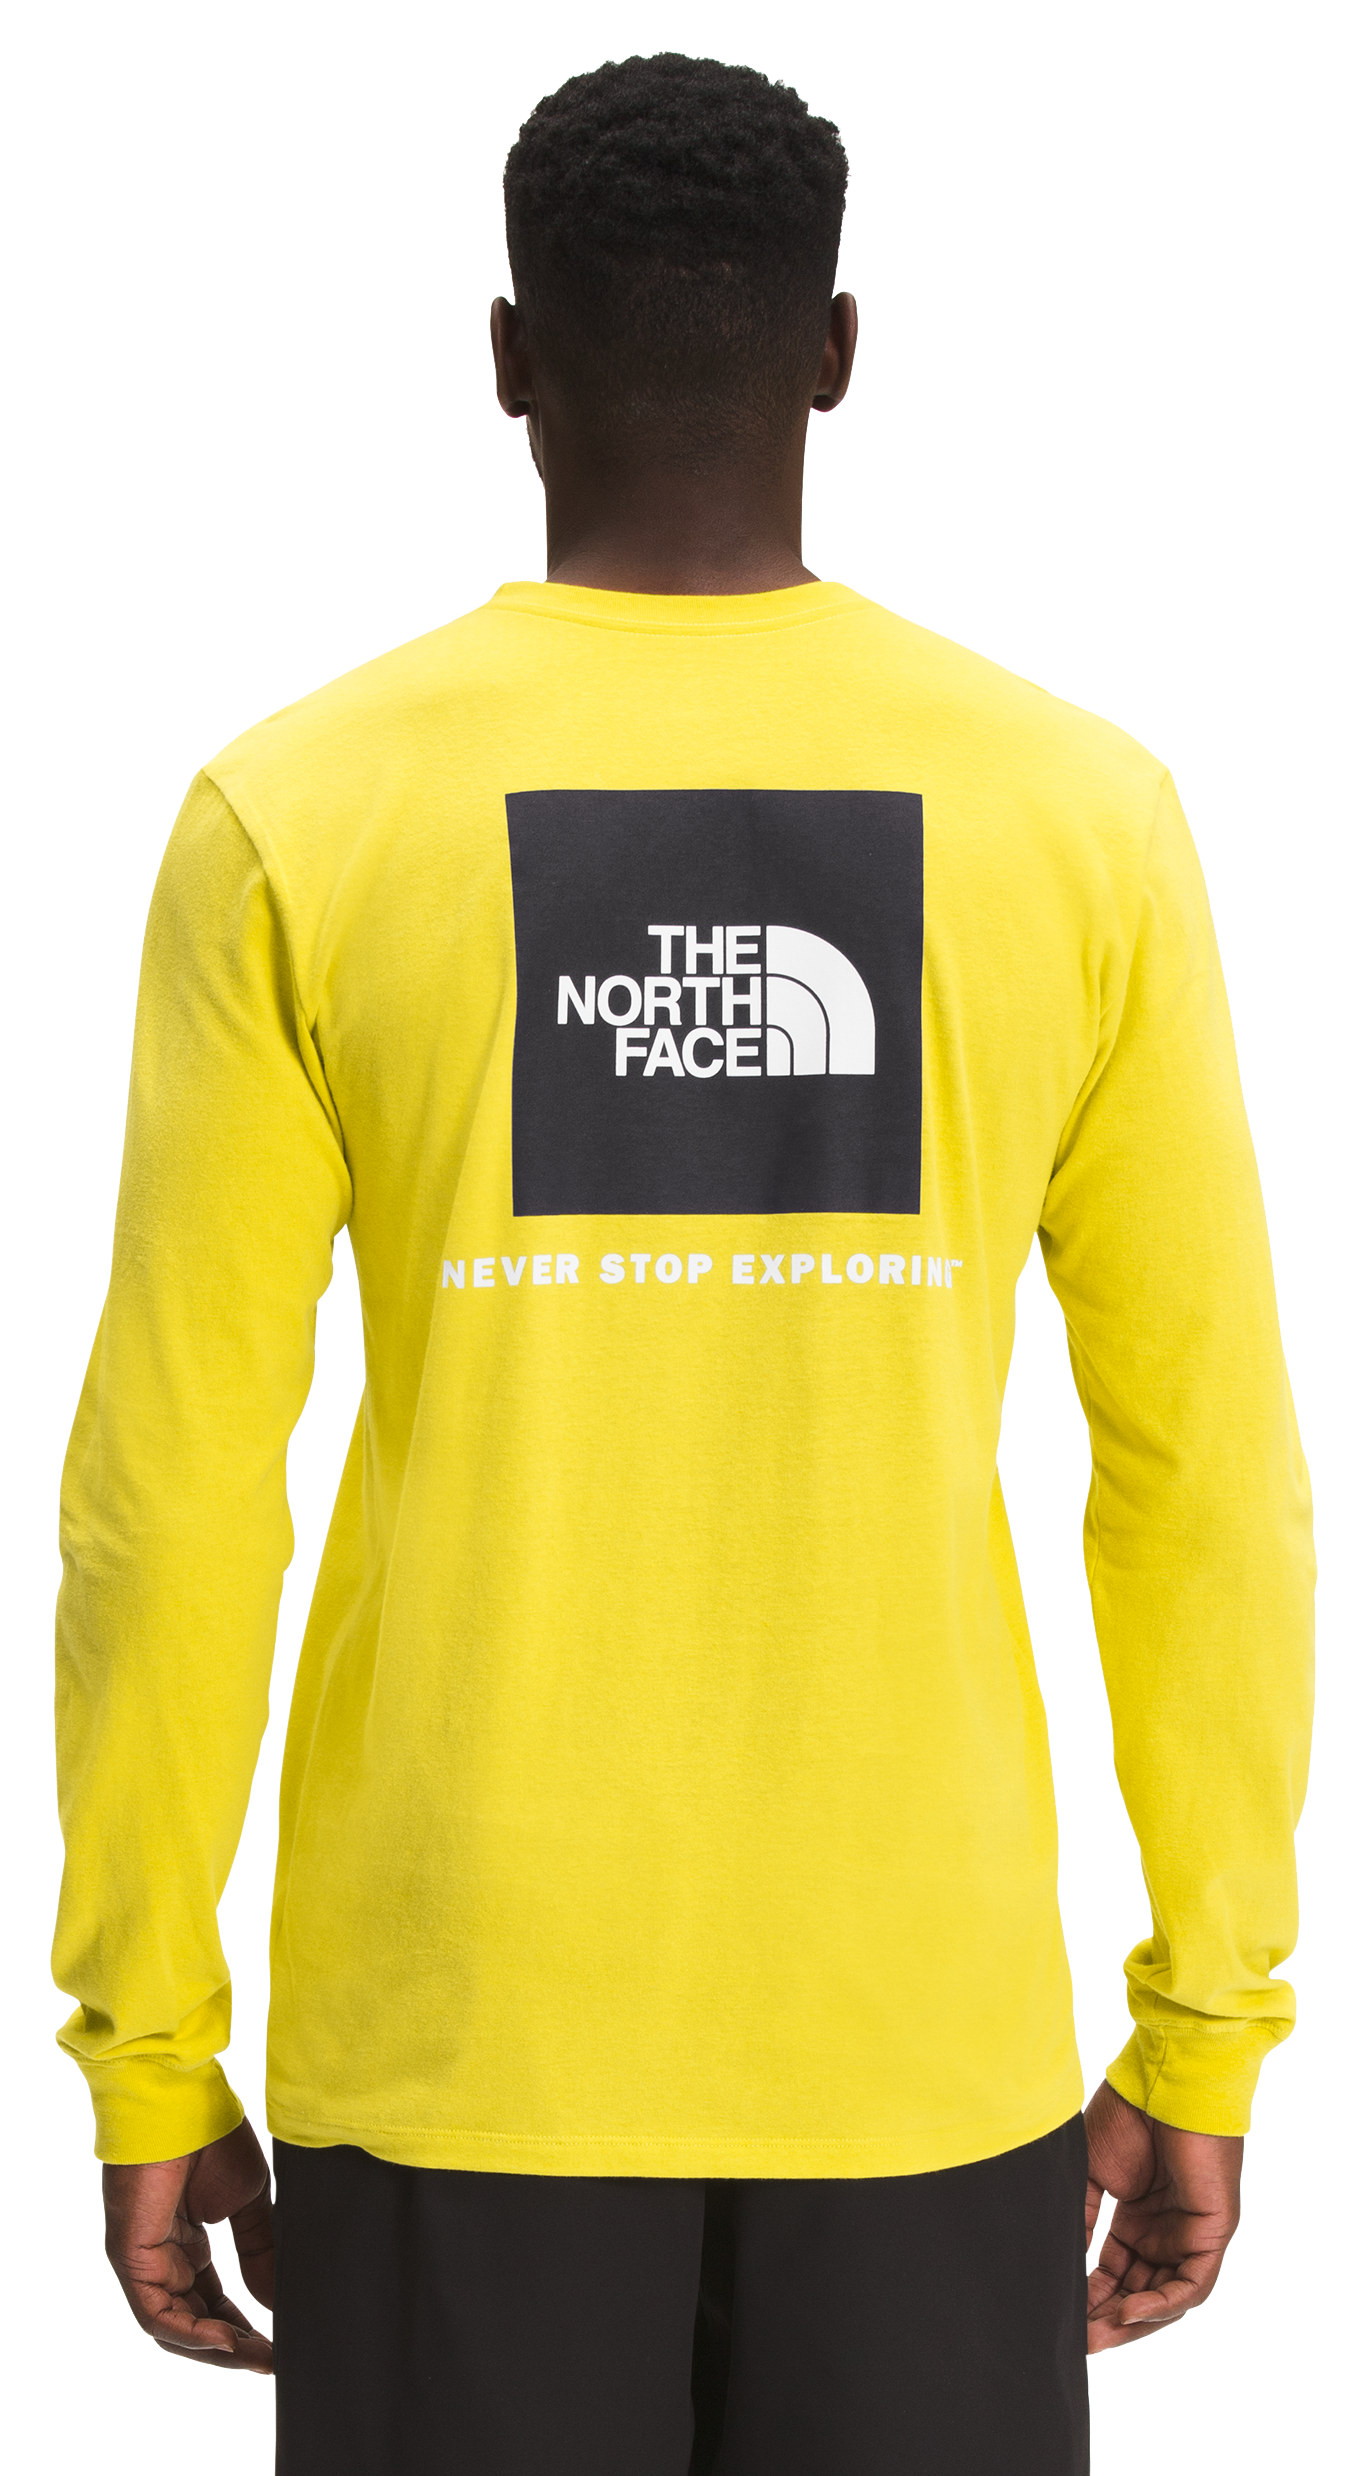 The North Face Box NSE Long-Sleeve Shirt for Men - Acid Yellow/TNF Black - XL